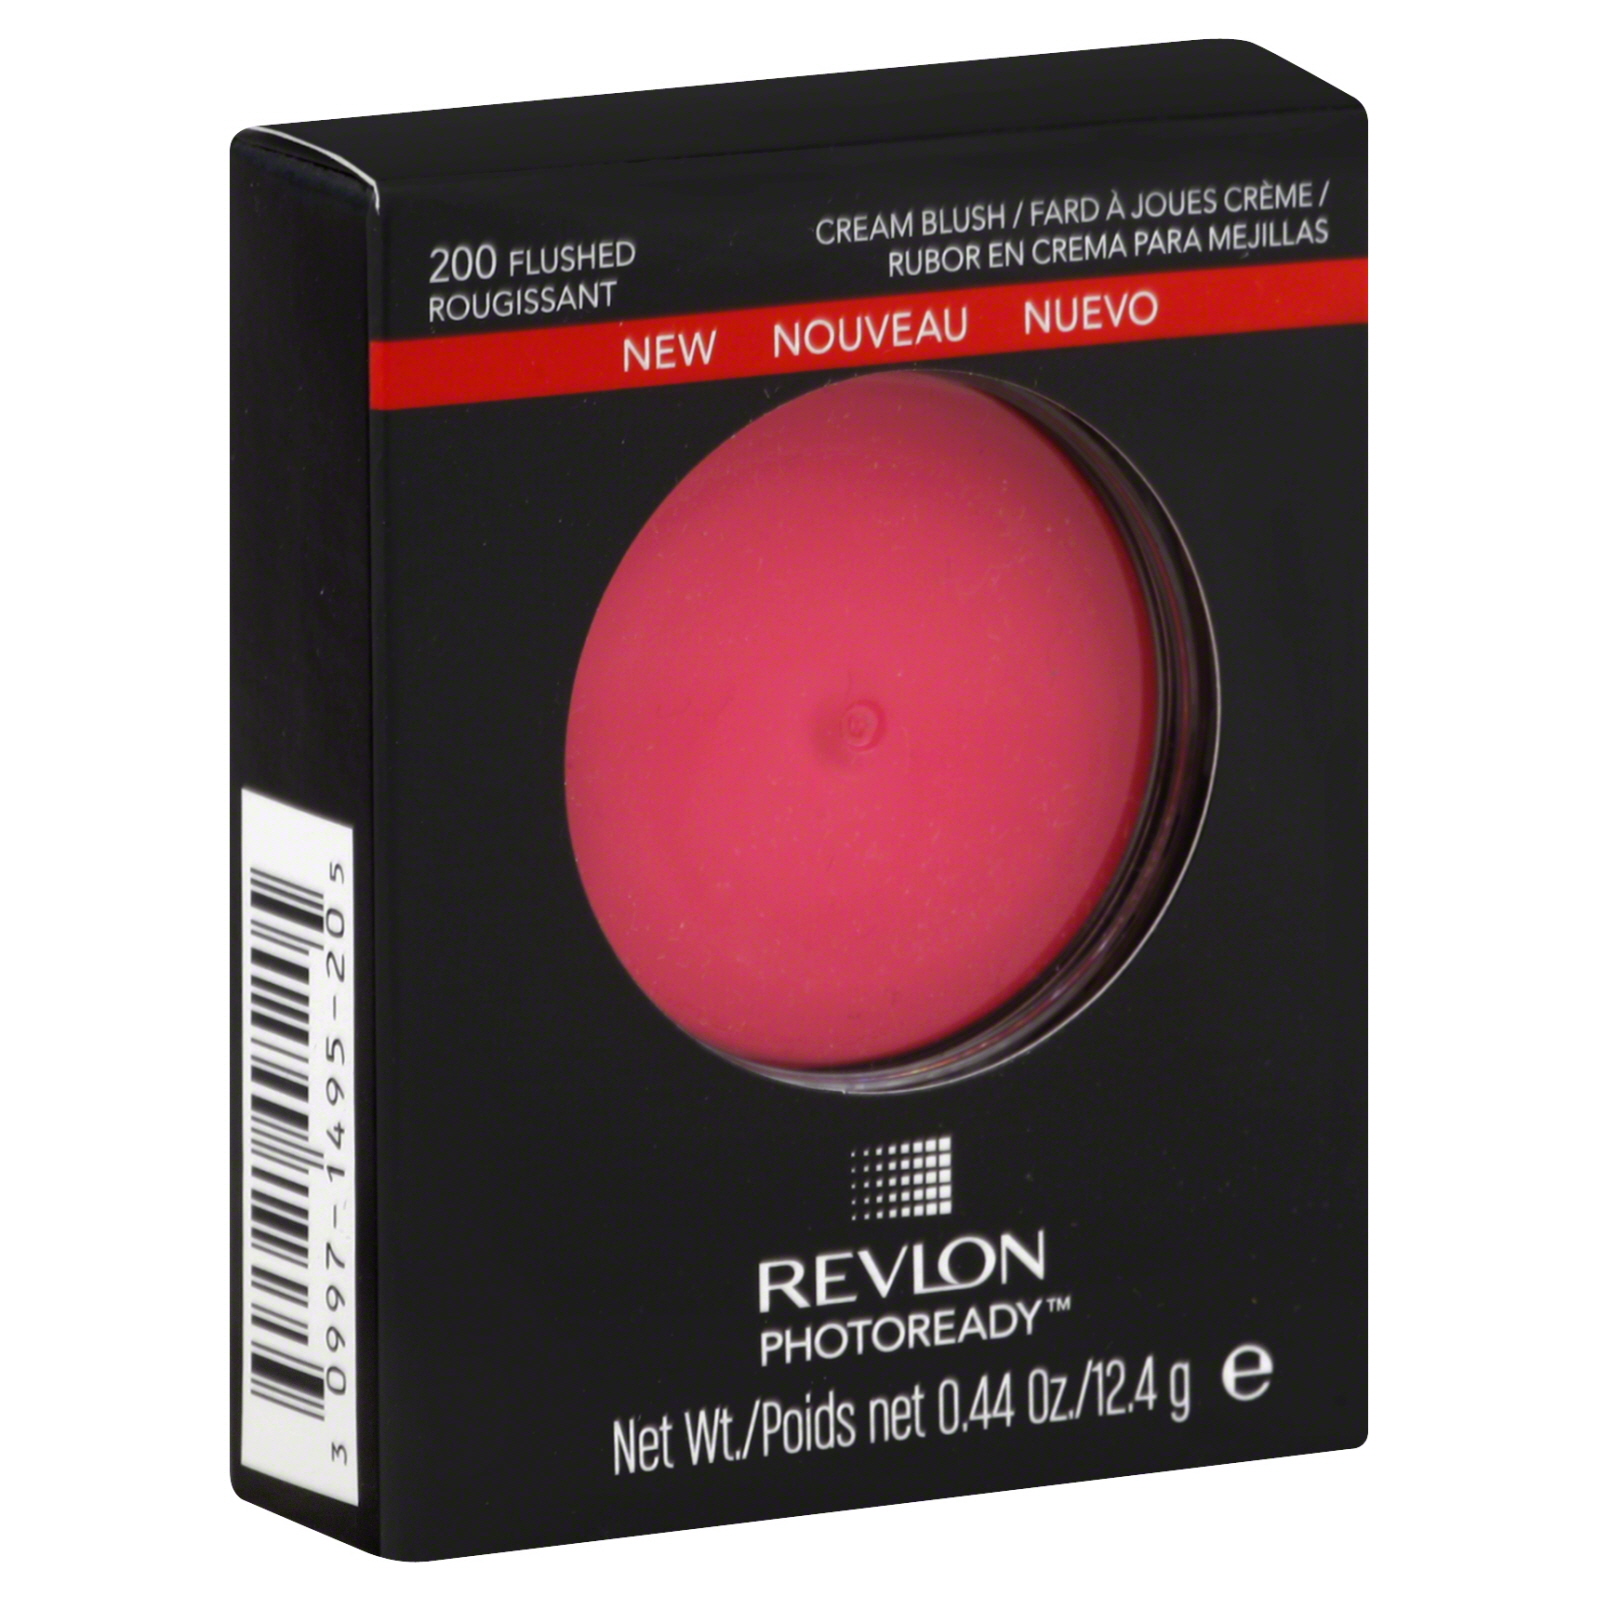 Revlon PhotoReady Cream Blush by Gucci Flushed 0.44 oz